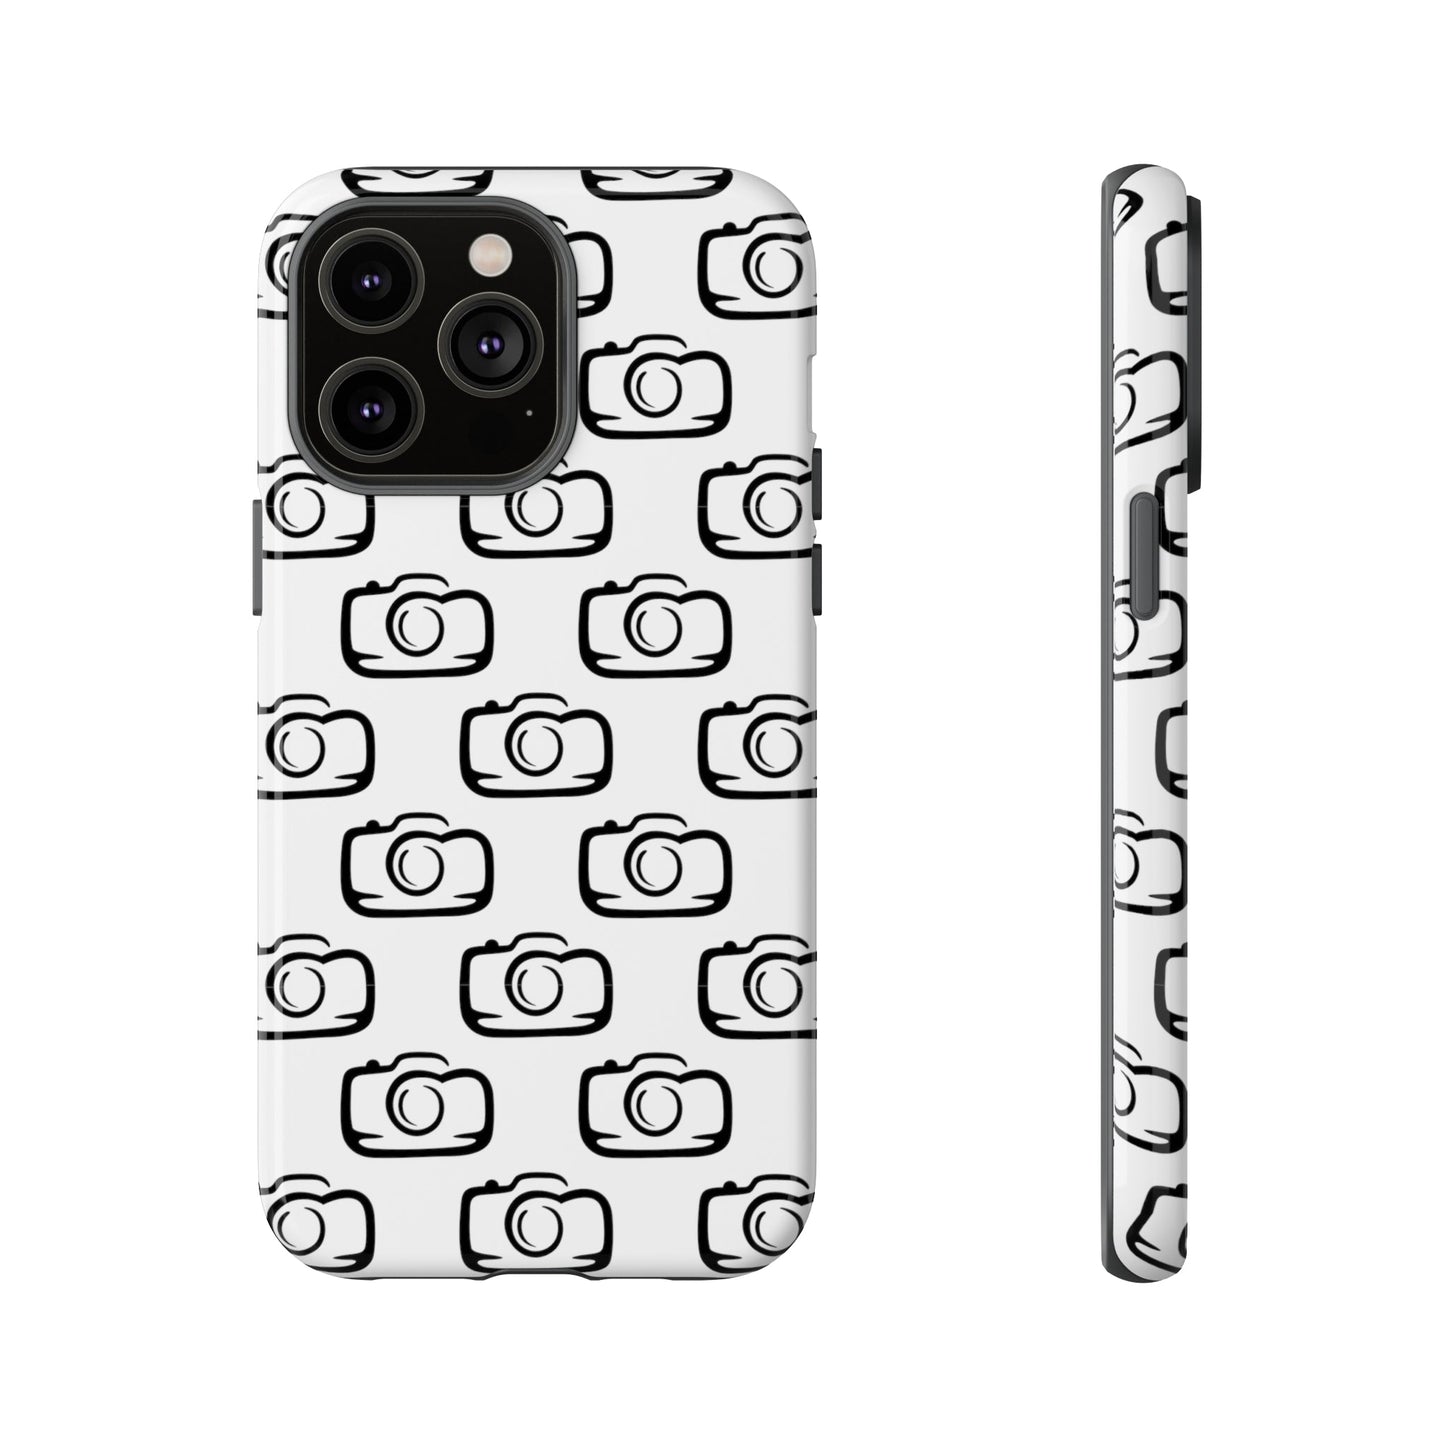 Phone case fits iPhone Samsung Galaxy Google Pixel - Photographer Phone Case - Cheerful Lane